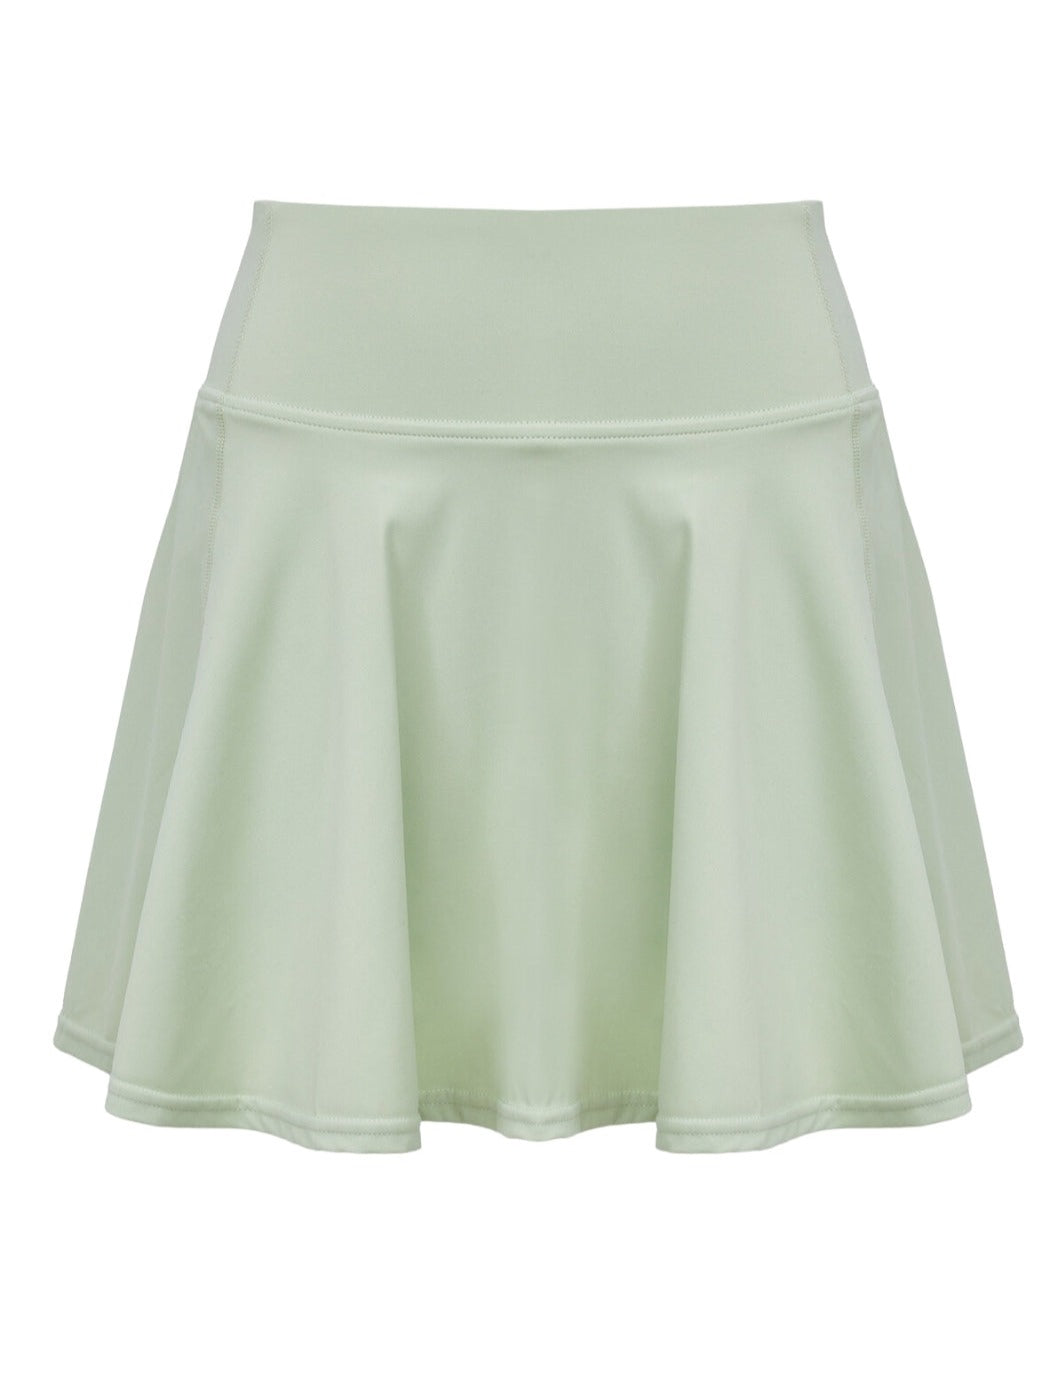 Leisure Tennis Skirt in Matcha (3 LEFT)